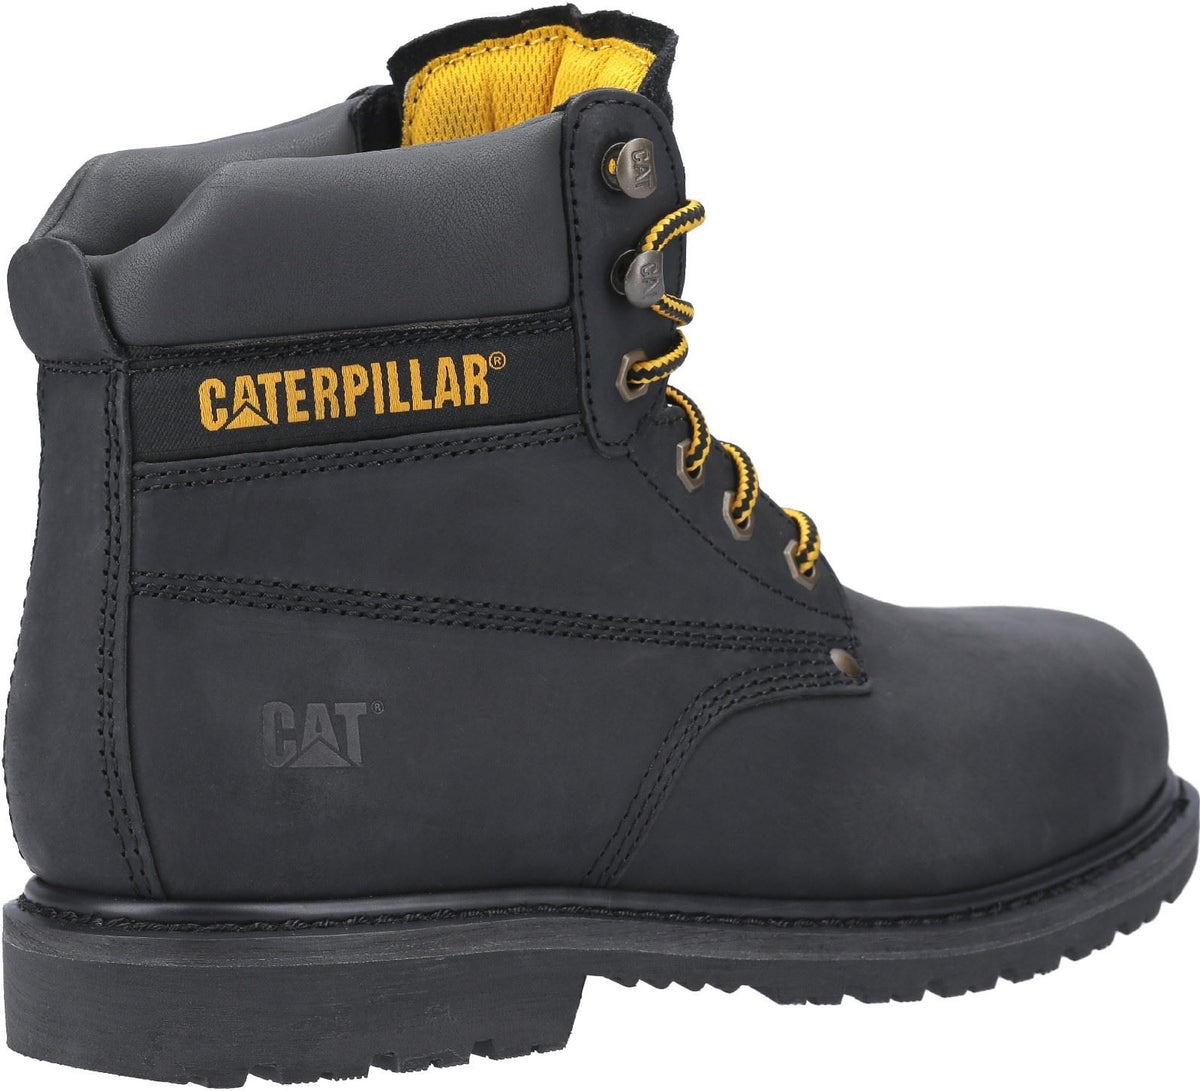 Caterpillar Powerplant GYW Safety Boots